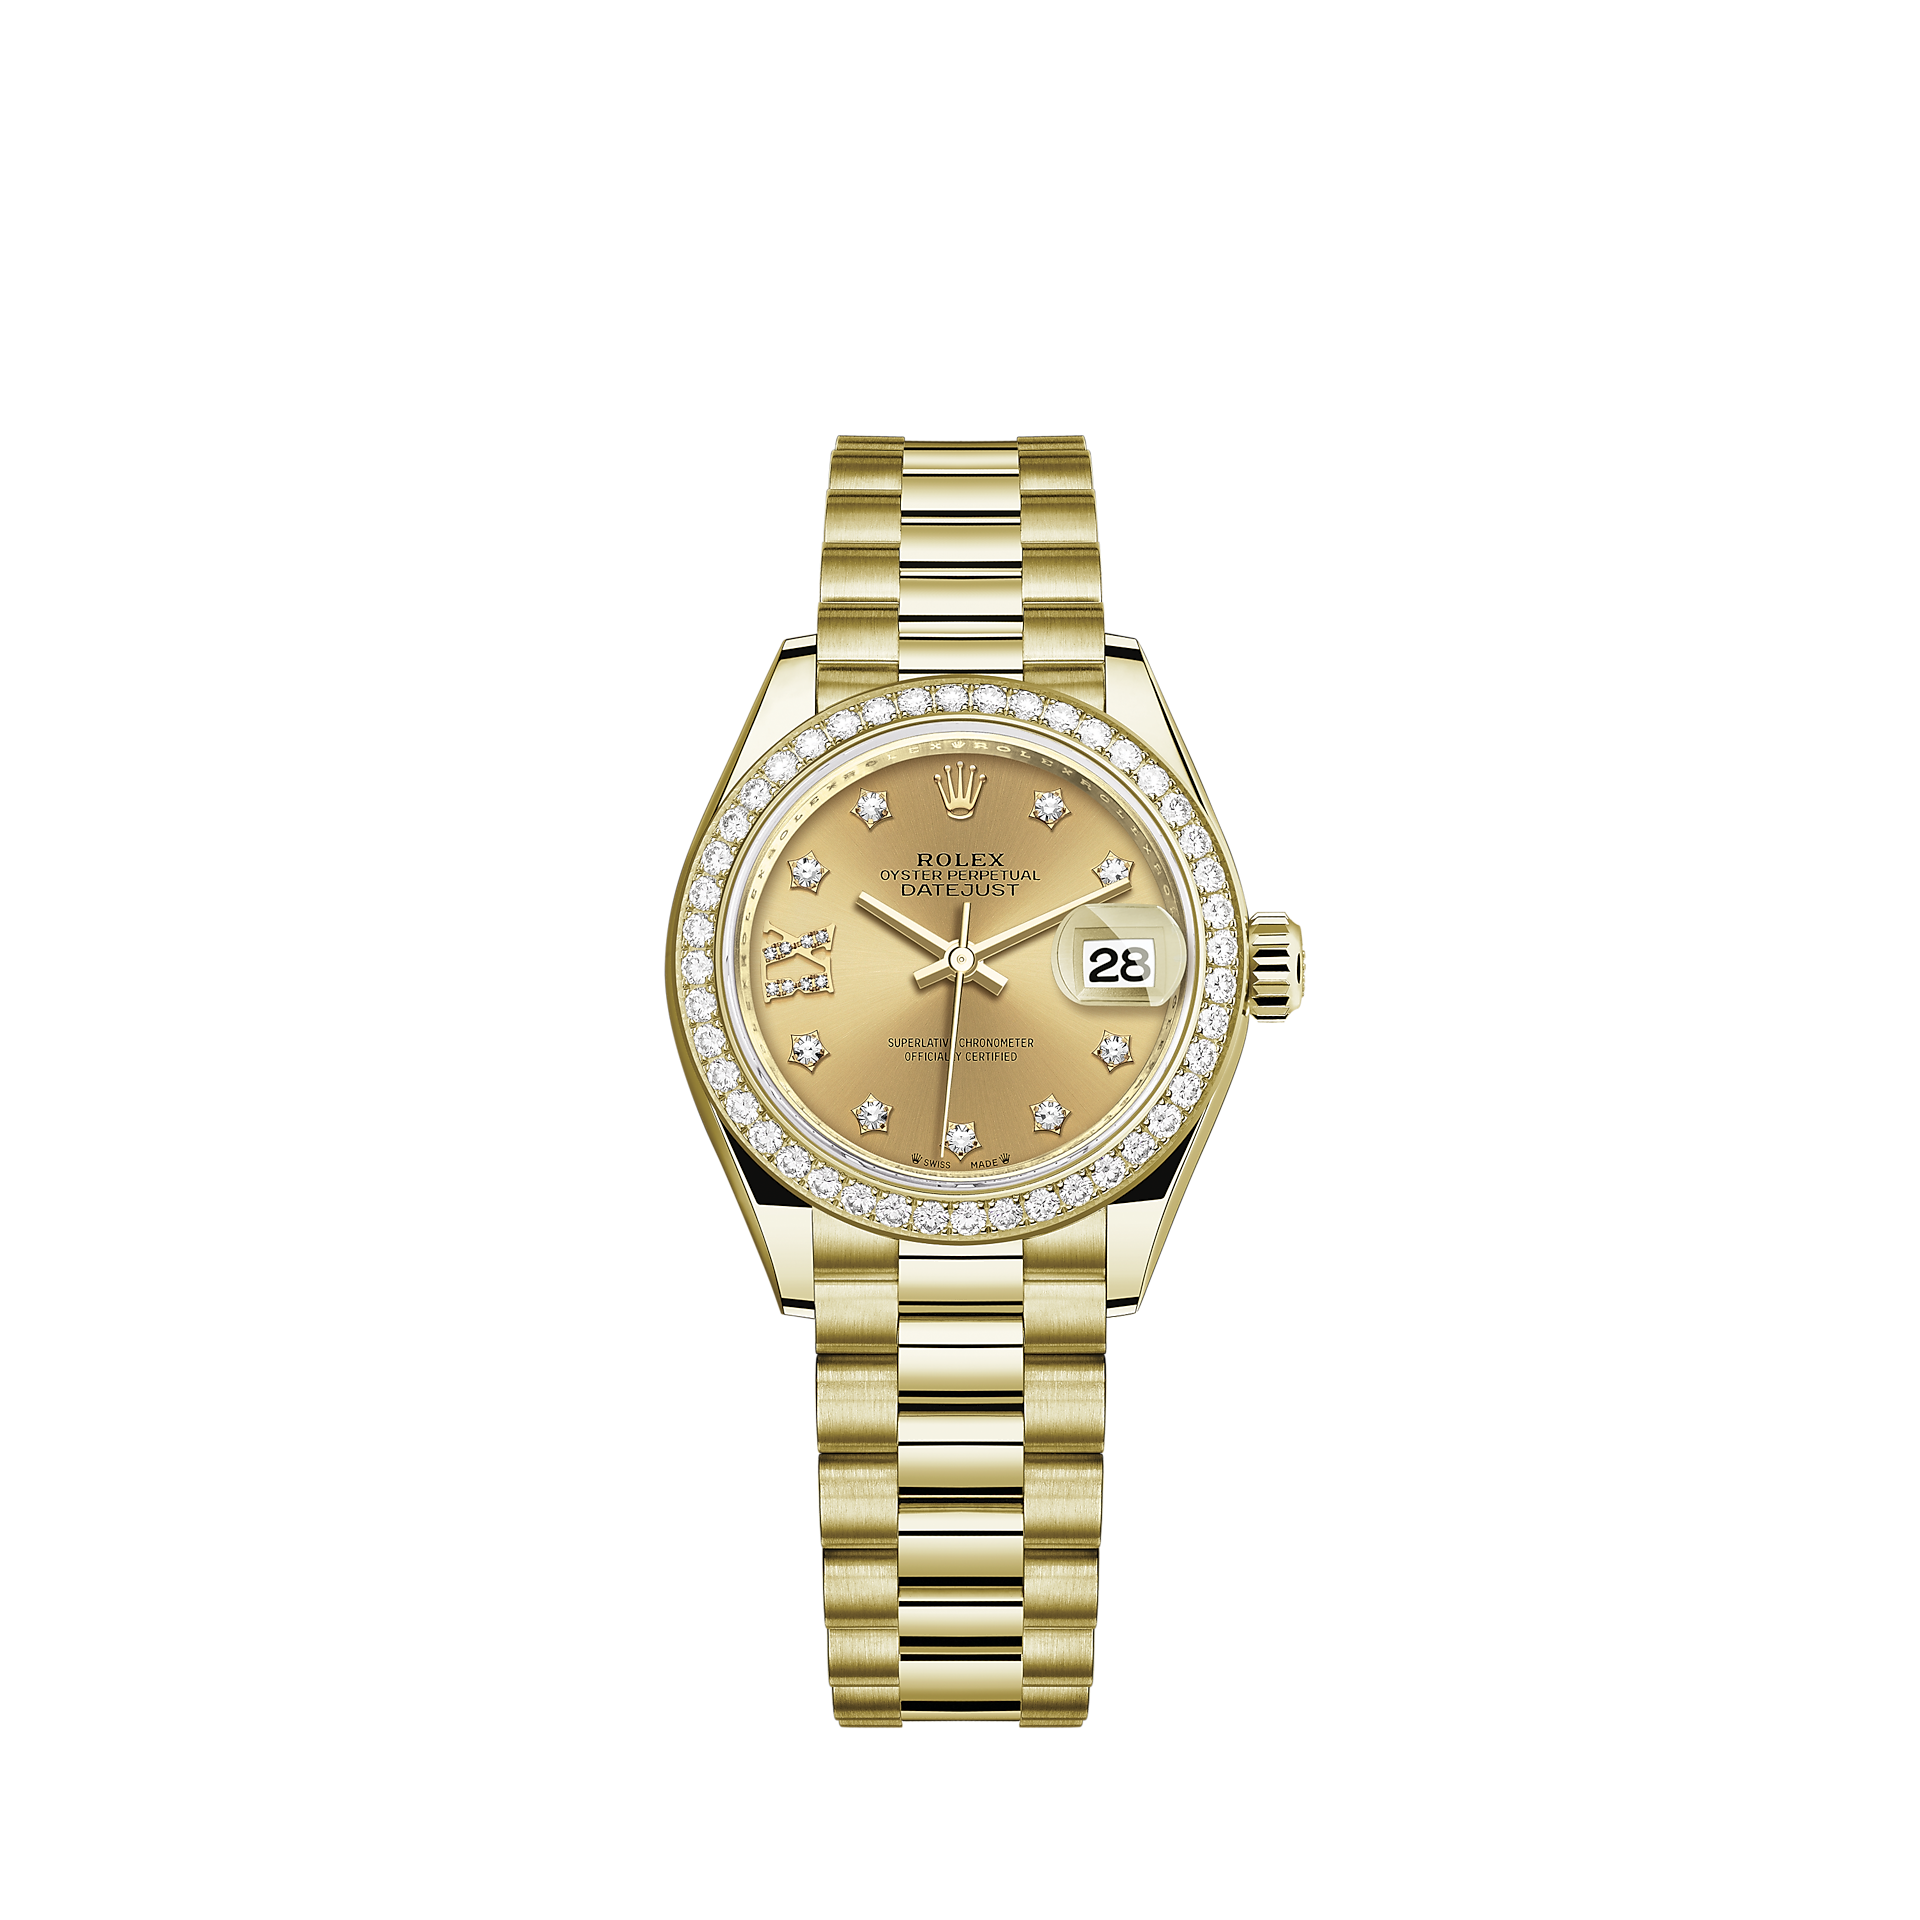 Mrbr 0006 Rolex Lady Datejust Watch 18 Ct Yellow Gold